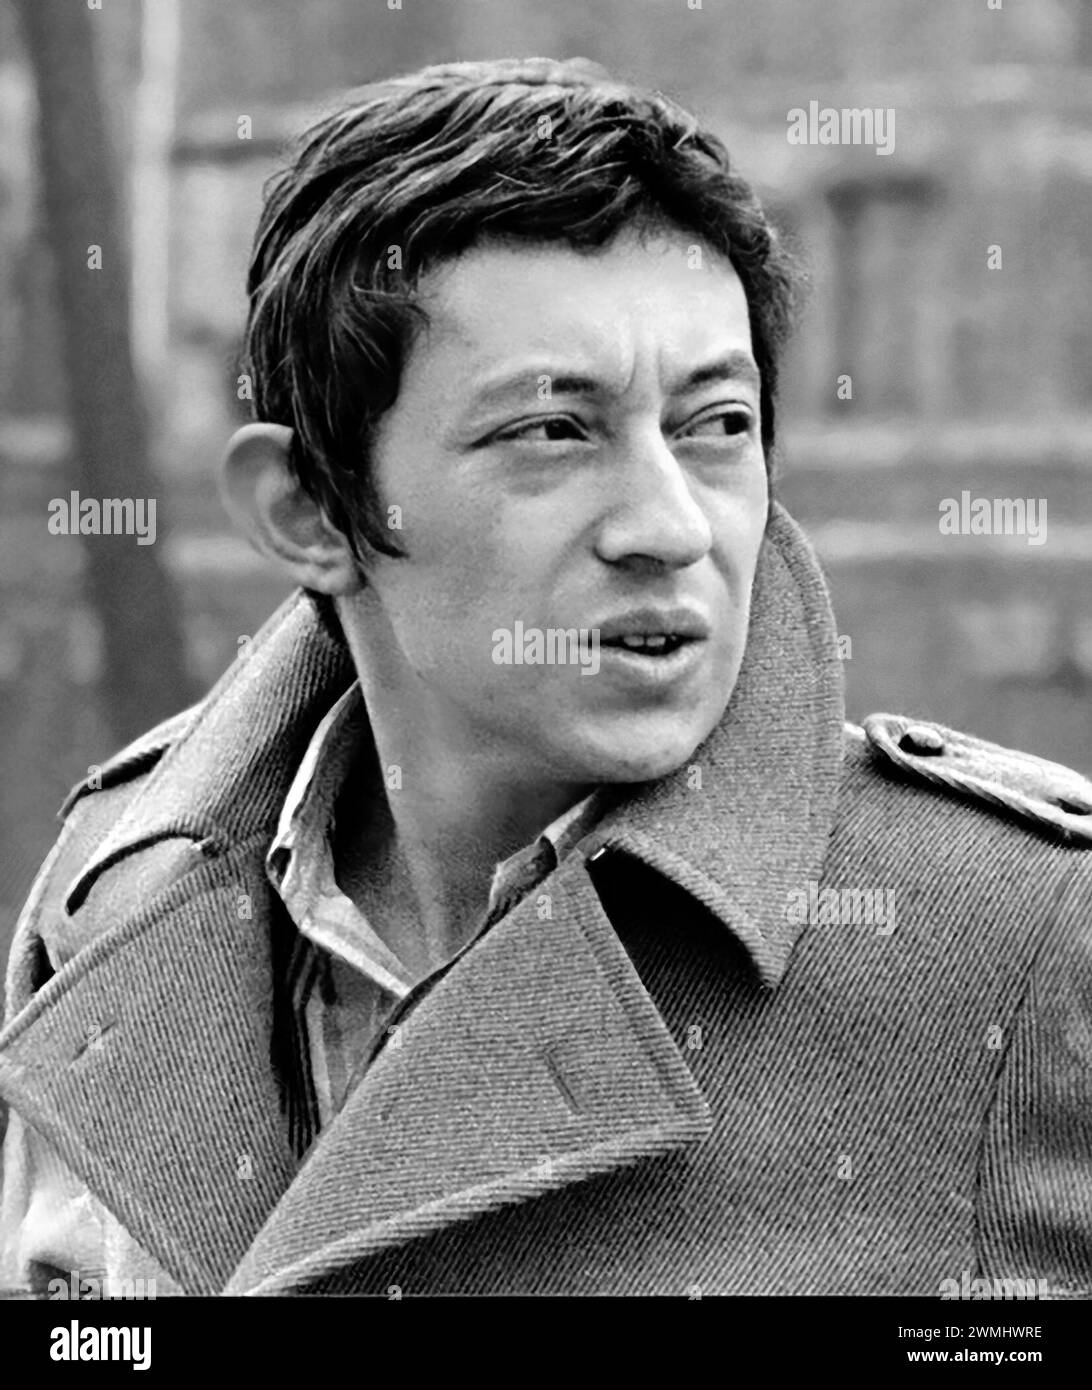 Serge Gainsbourg. Retrato del actor y cantante francés, Serge Gainsbourg (Lucien Ginsburg: 1928-1991) en 1971 Foto de stock